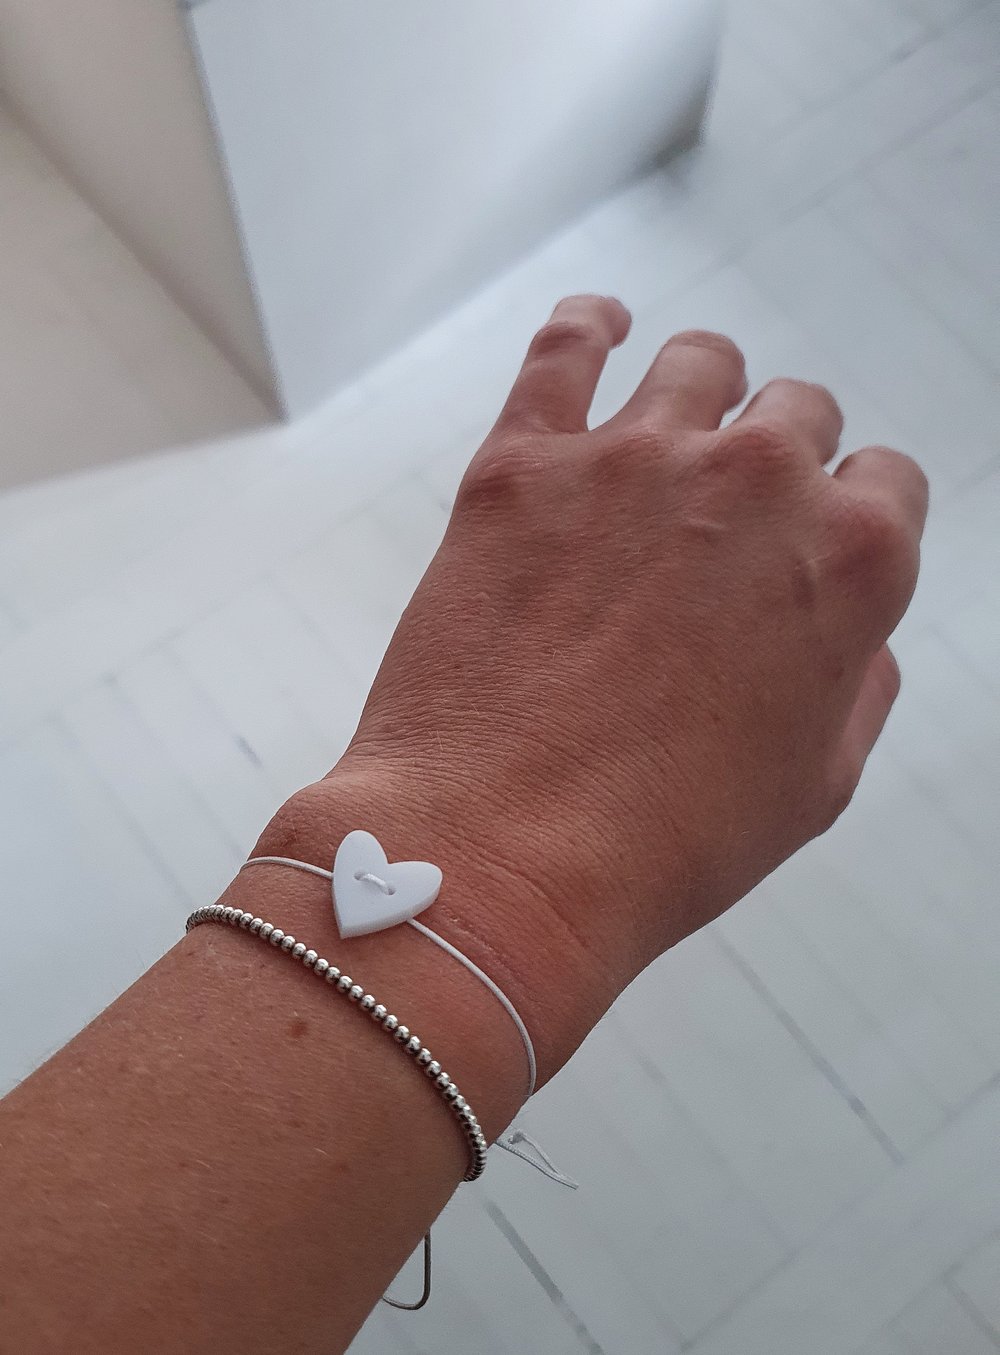 broška + zapestnica SRCE // bela - POSEBNA CENA / brooch + bracelet HEART // white - SPECIAL PRICE